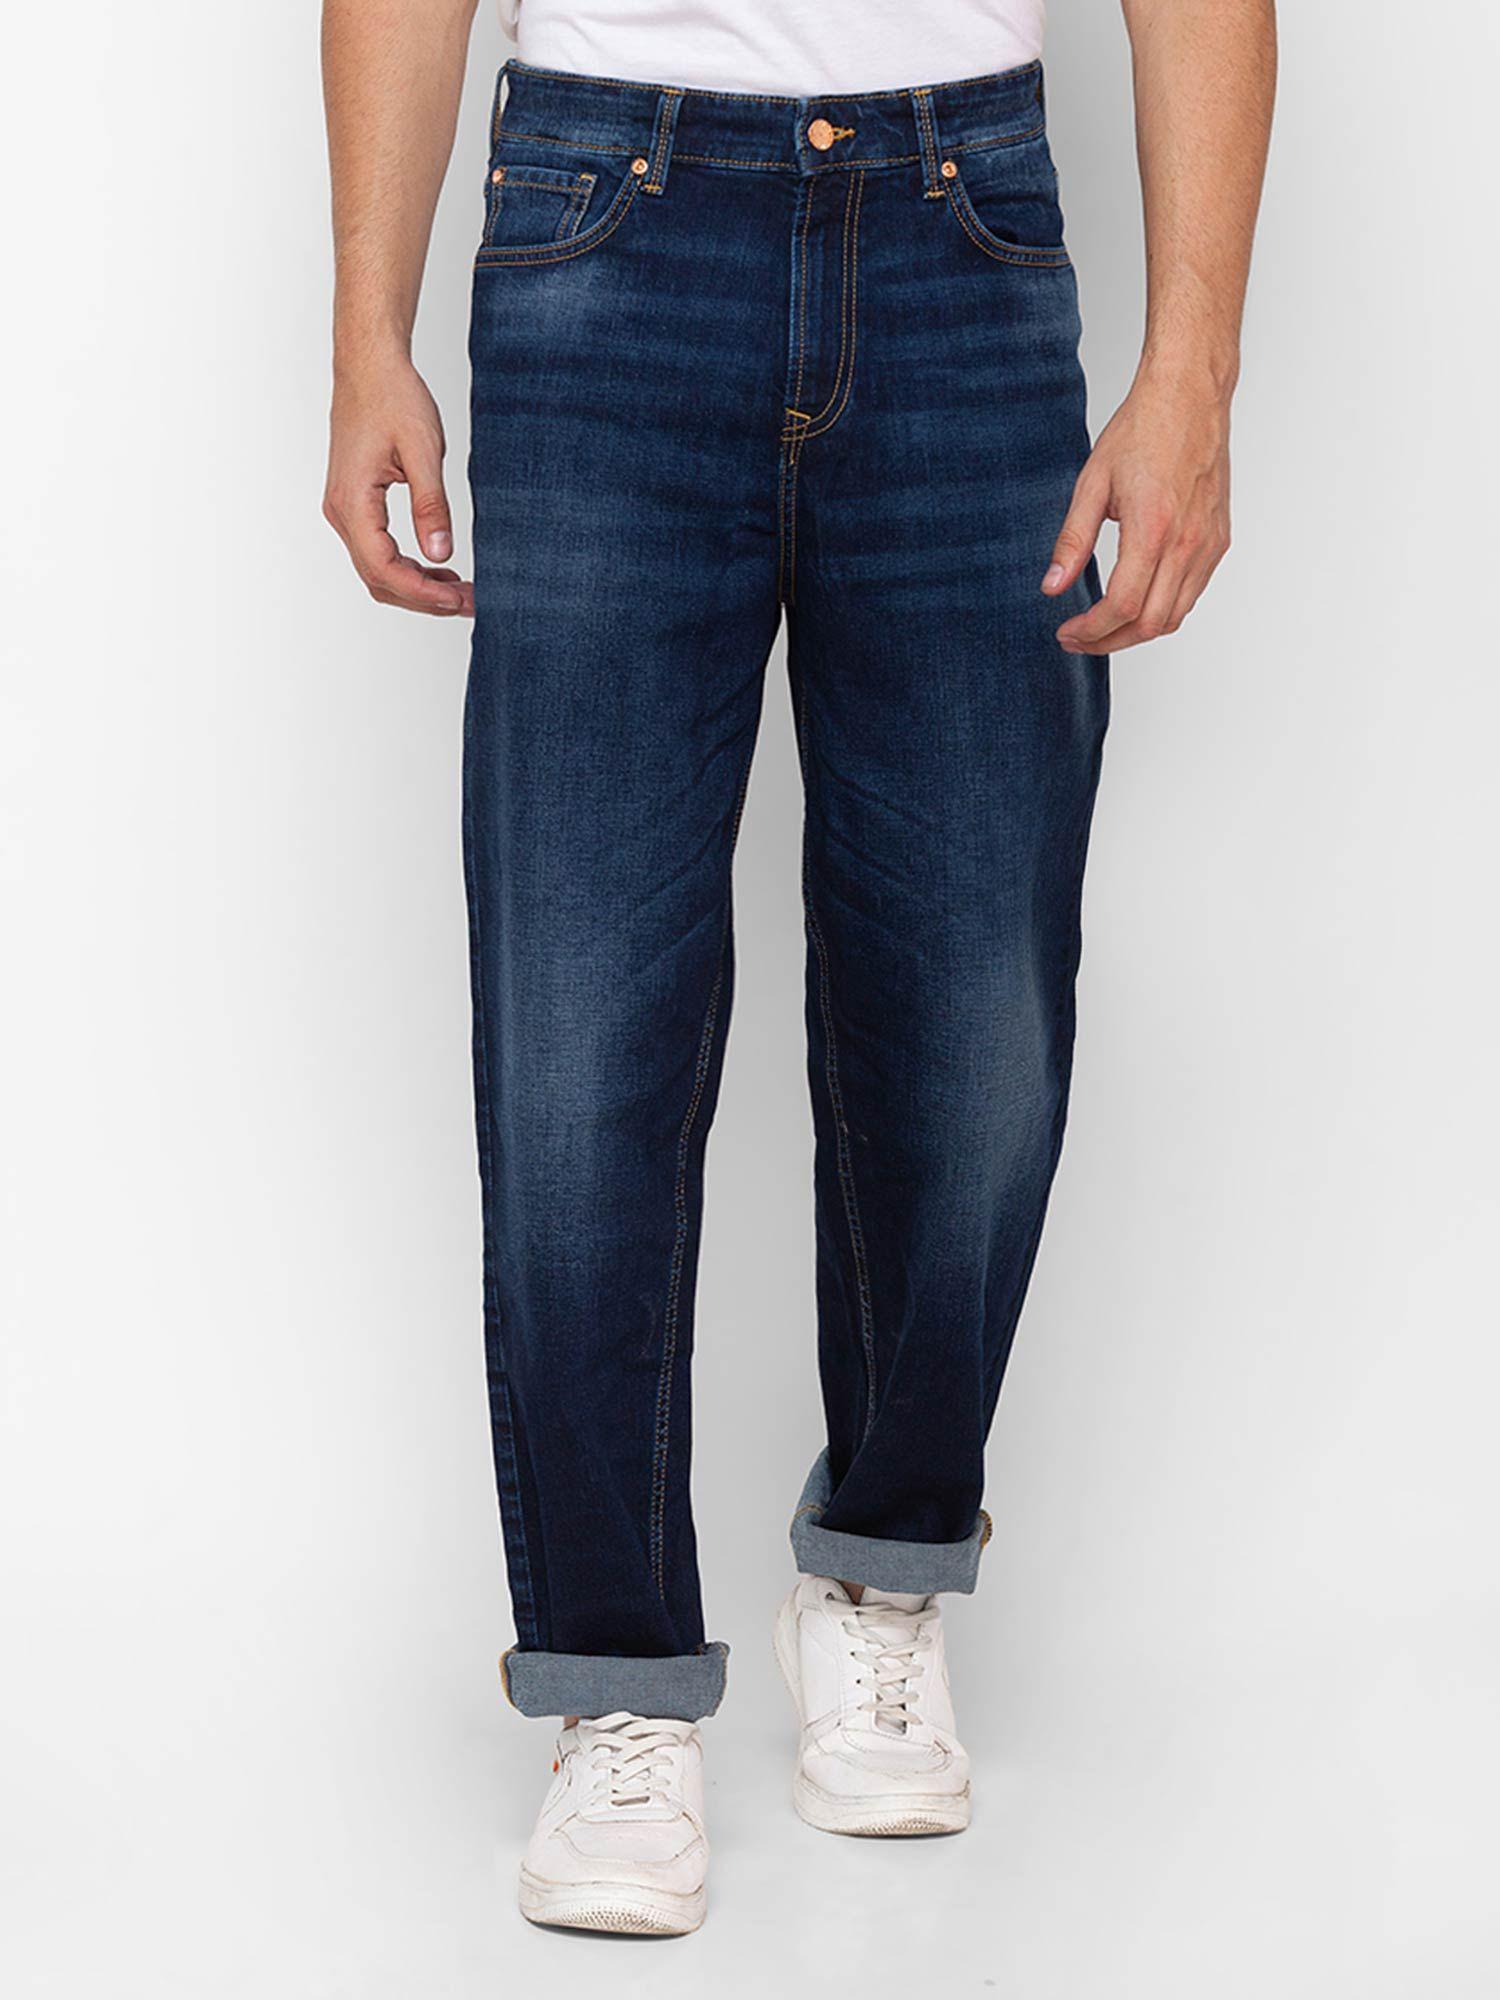 dark blue cotton loose fit regular length jeans for men (renato)